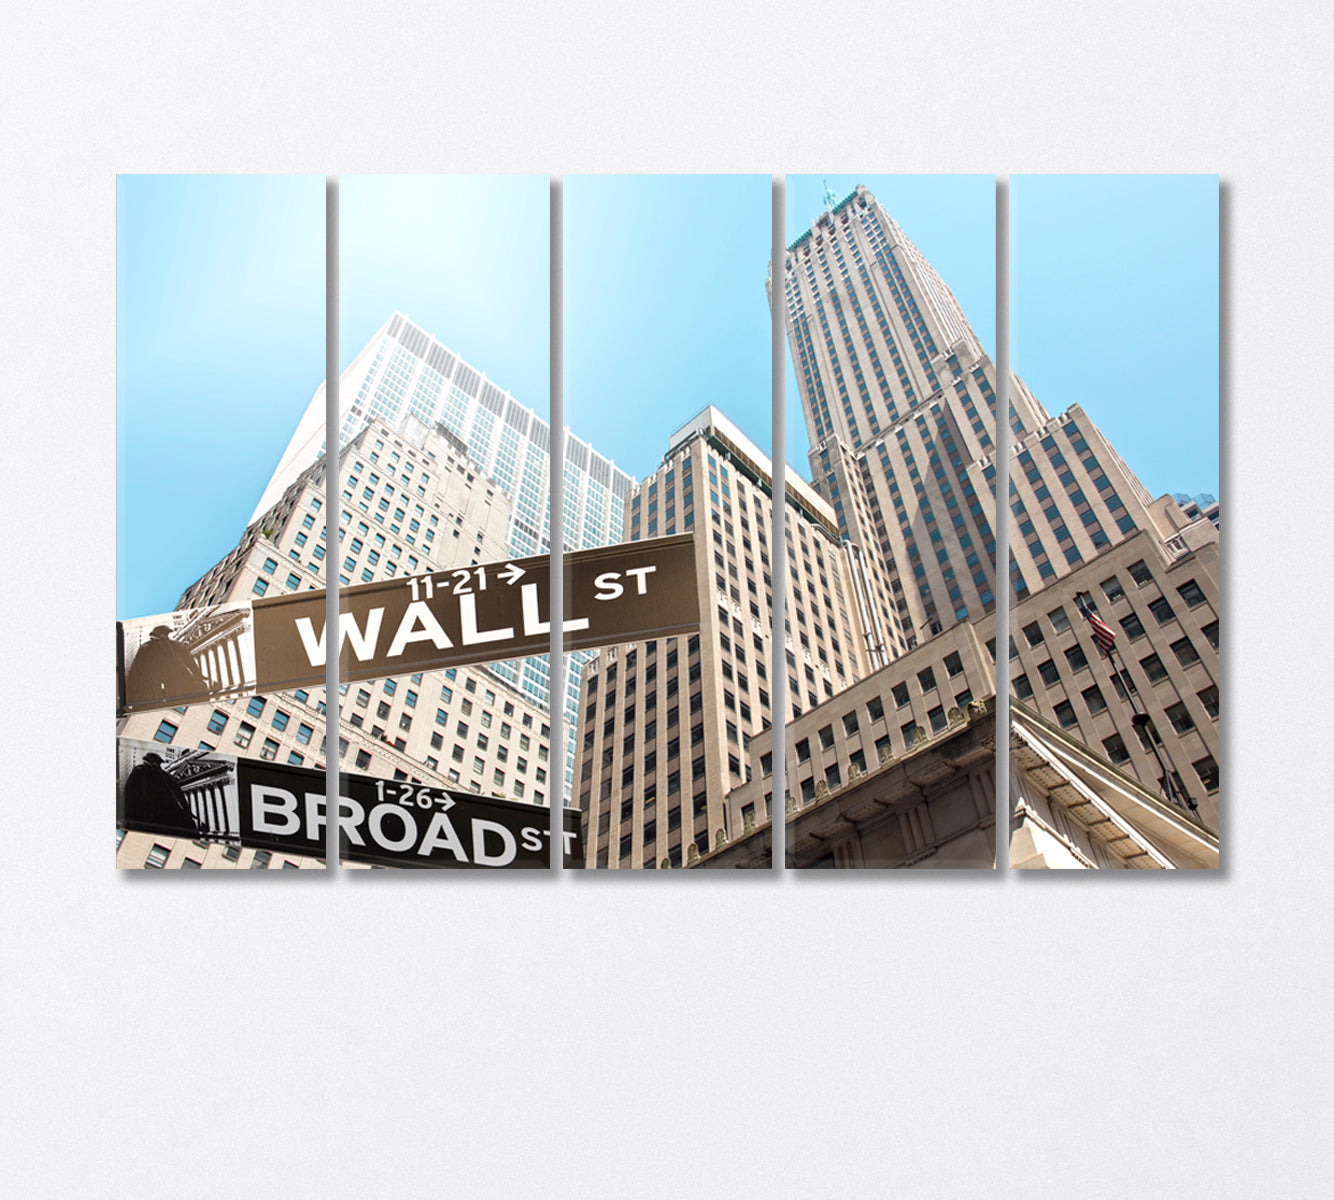 Road Sign Wall Street New York USA Canvas Print-Canvas Print-CetArt-5 Panels-36x24 inches-CetArt